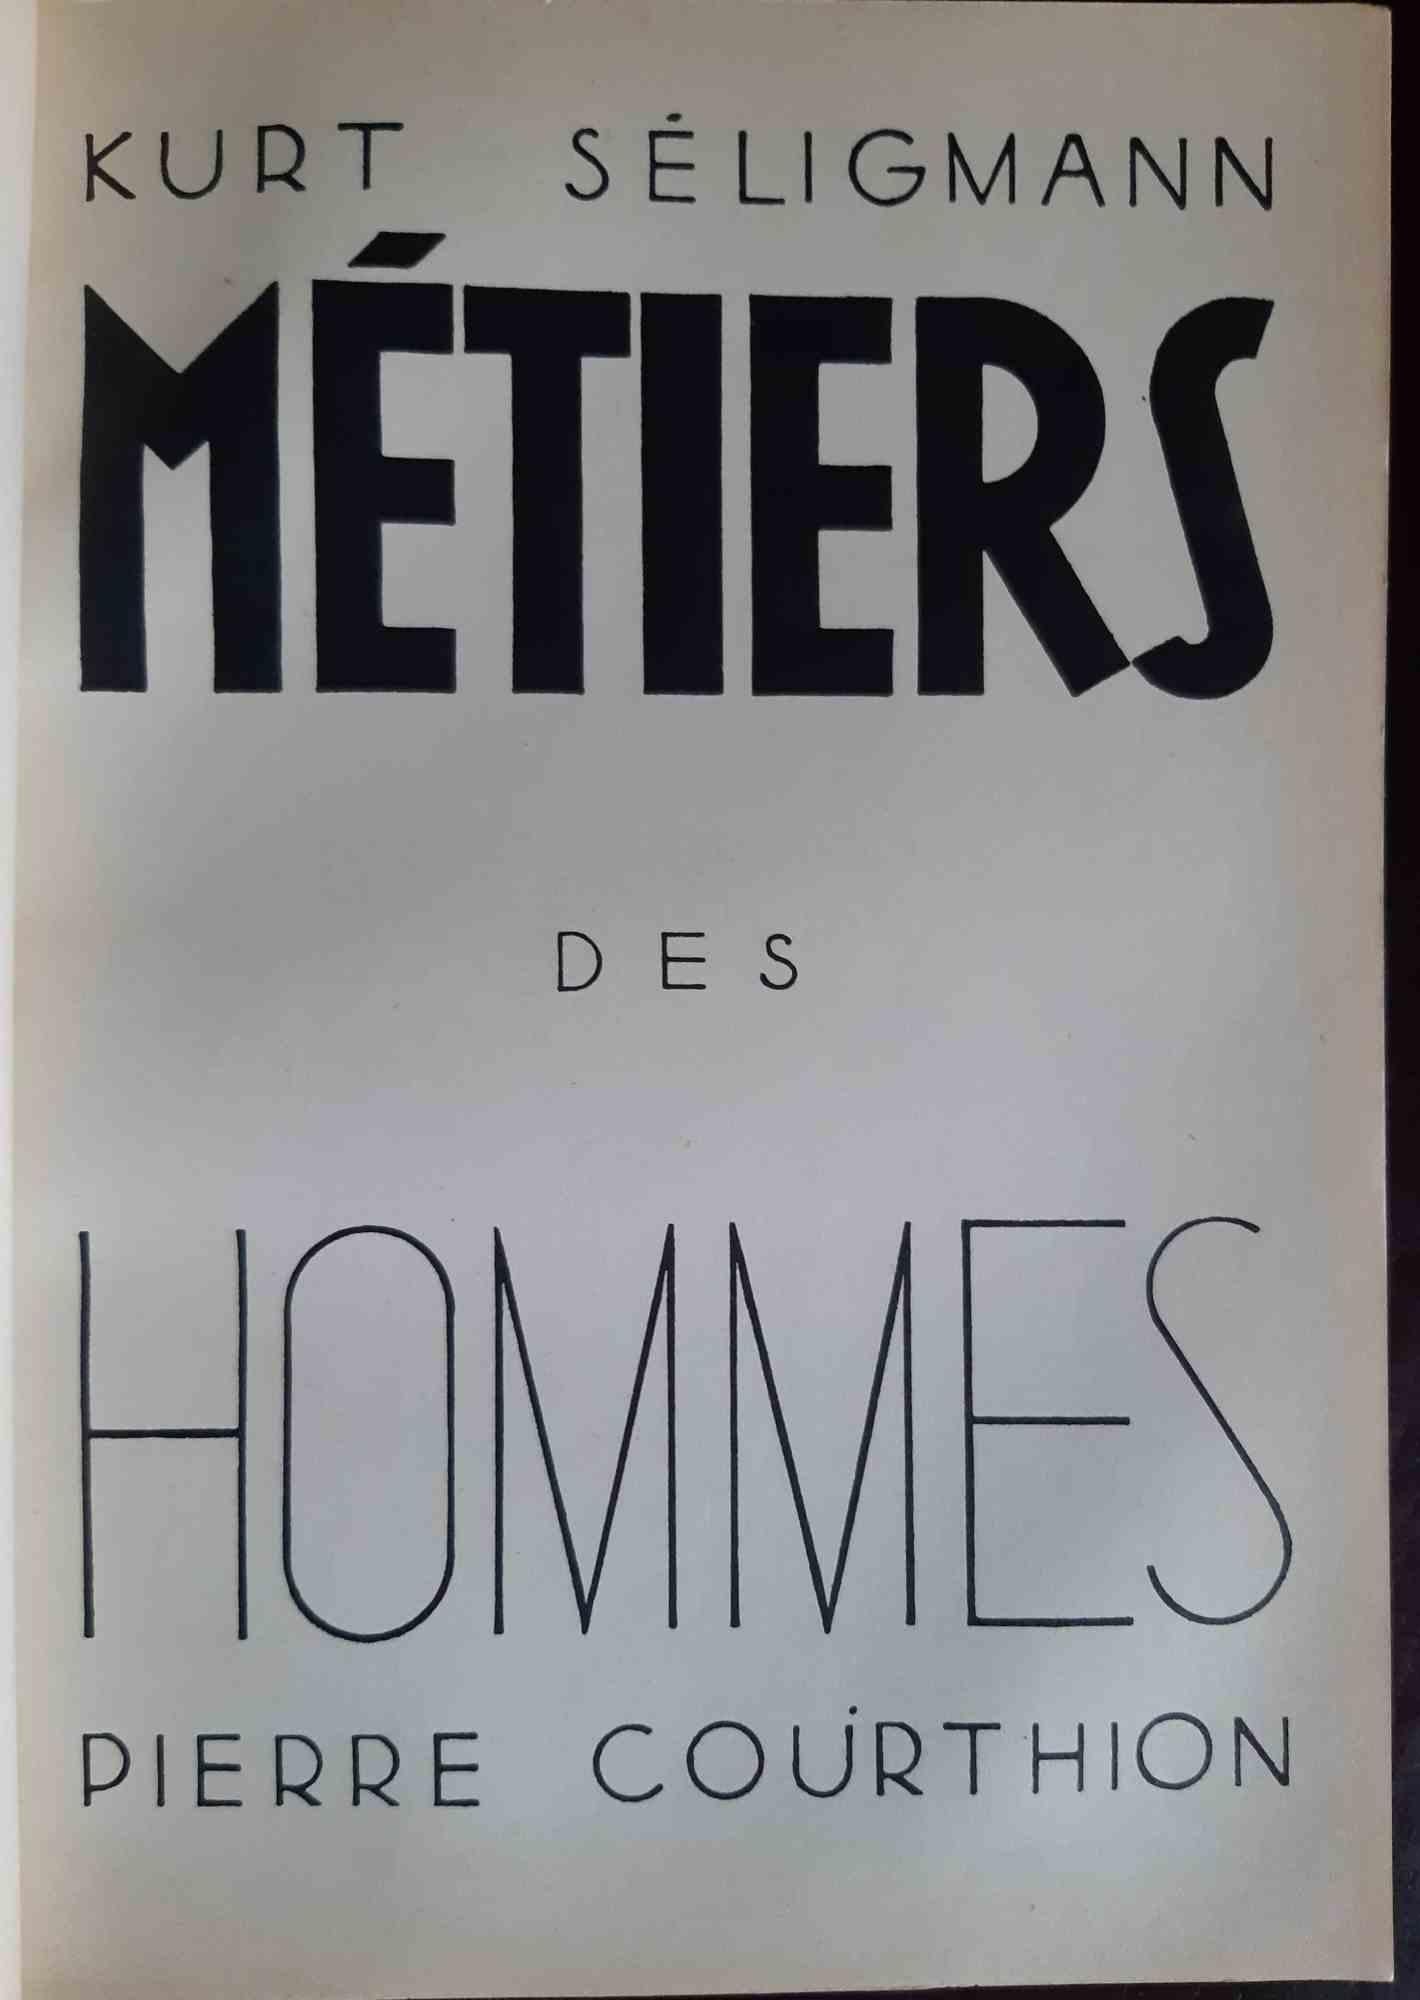 Métiers des Hommes - Rare Book Illustrated by Kurt Seligmann - 1936 For Sale 2